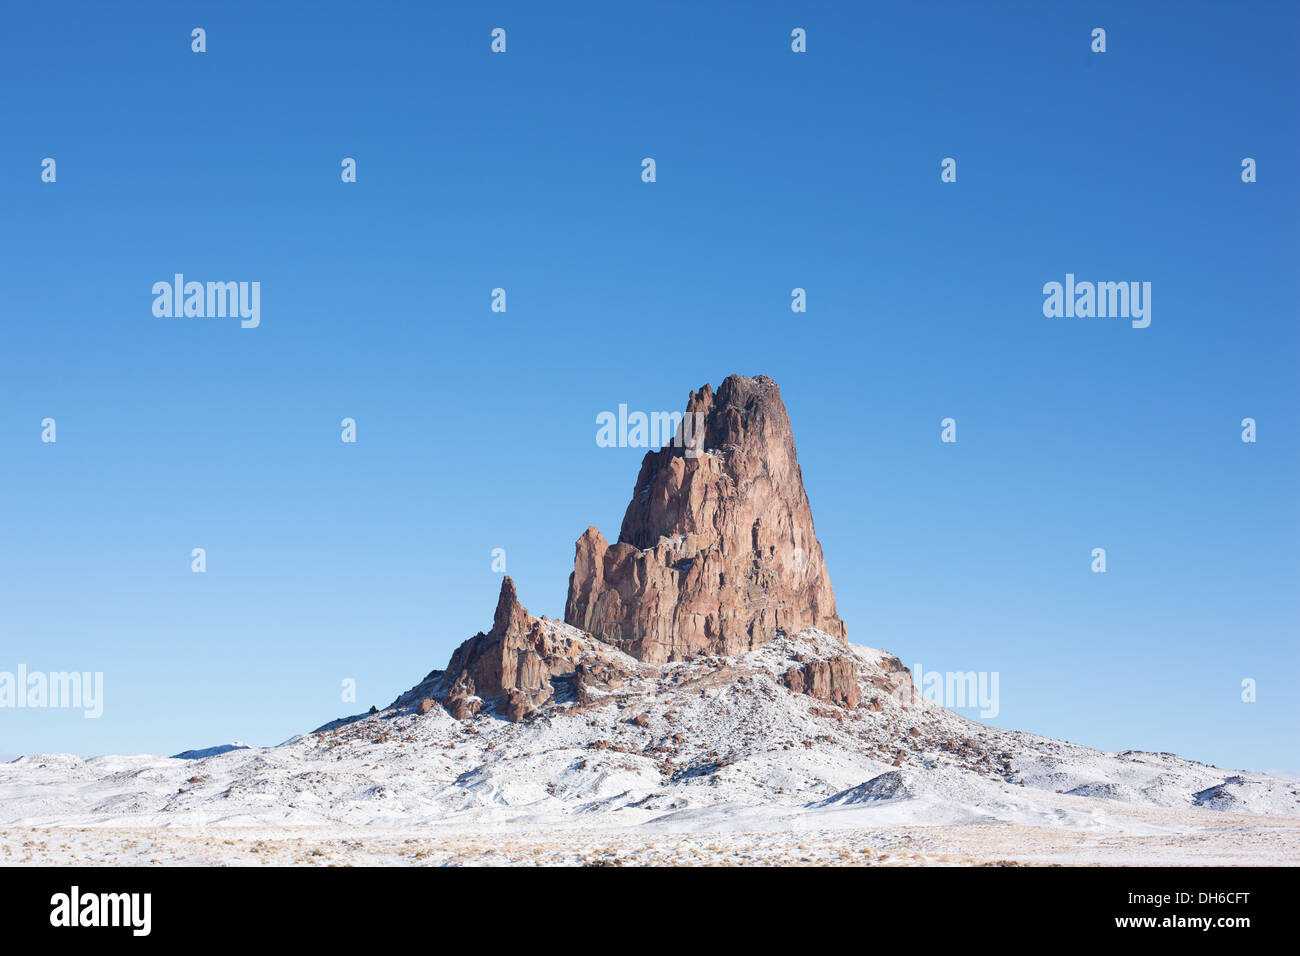 Col volcanique isolé en hiver.El Capitan aka Agathla Peak au nord de Kayenta, sur la terre Navajo, comté de Navajo, Arizona, États-Unis. Banque D'Images